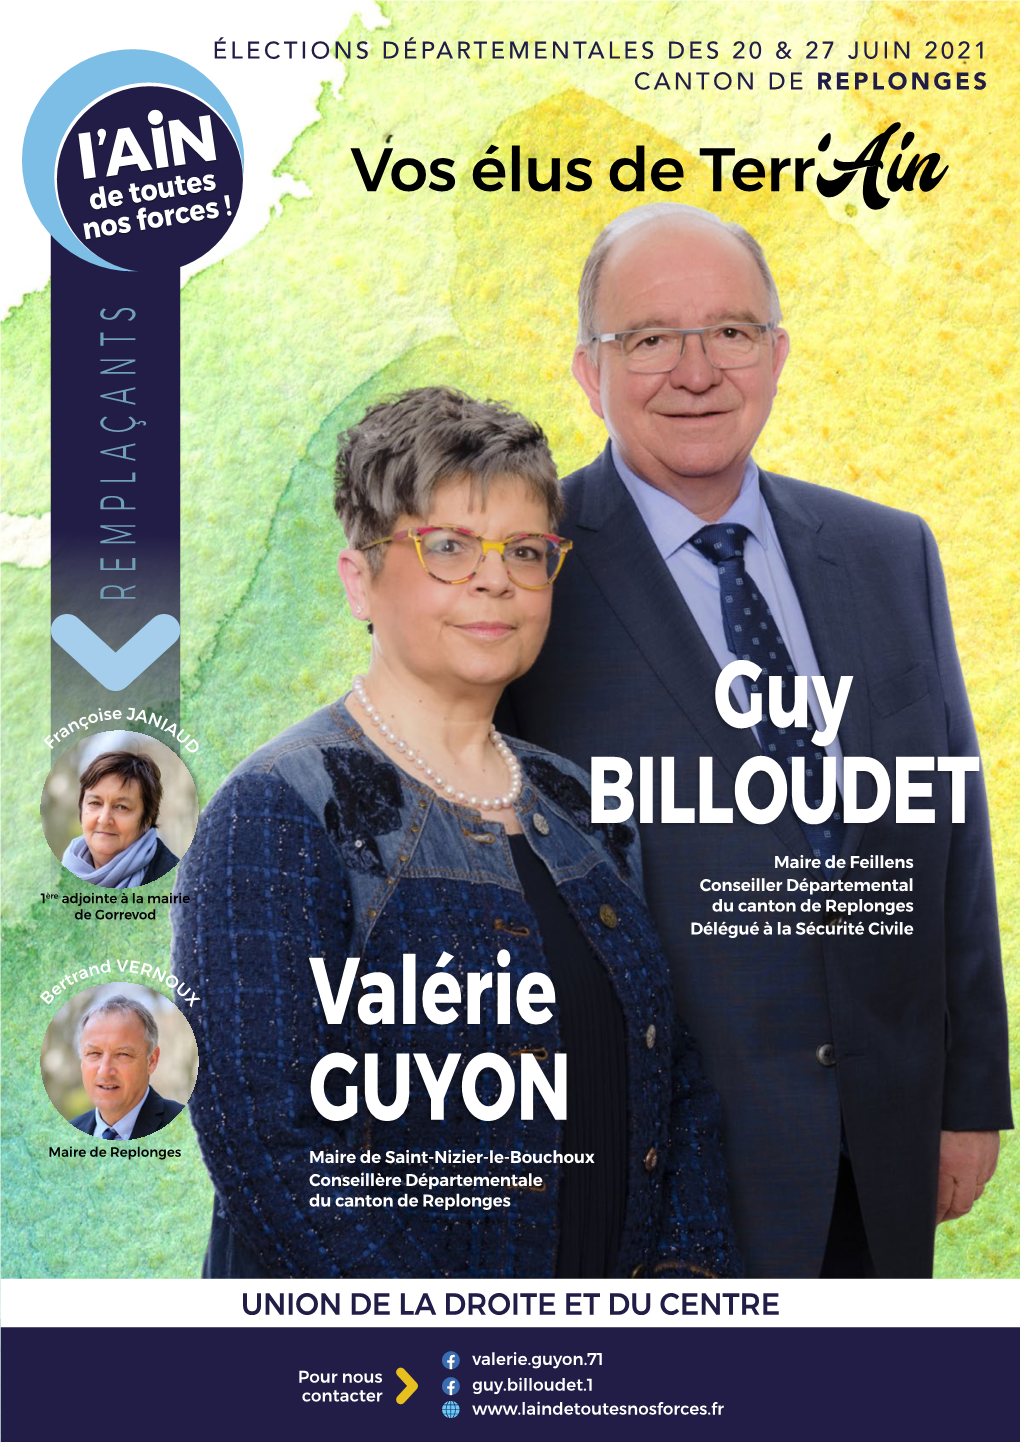 Guy BILLOUDET Valérie GUYON